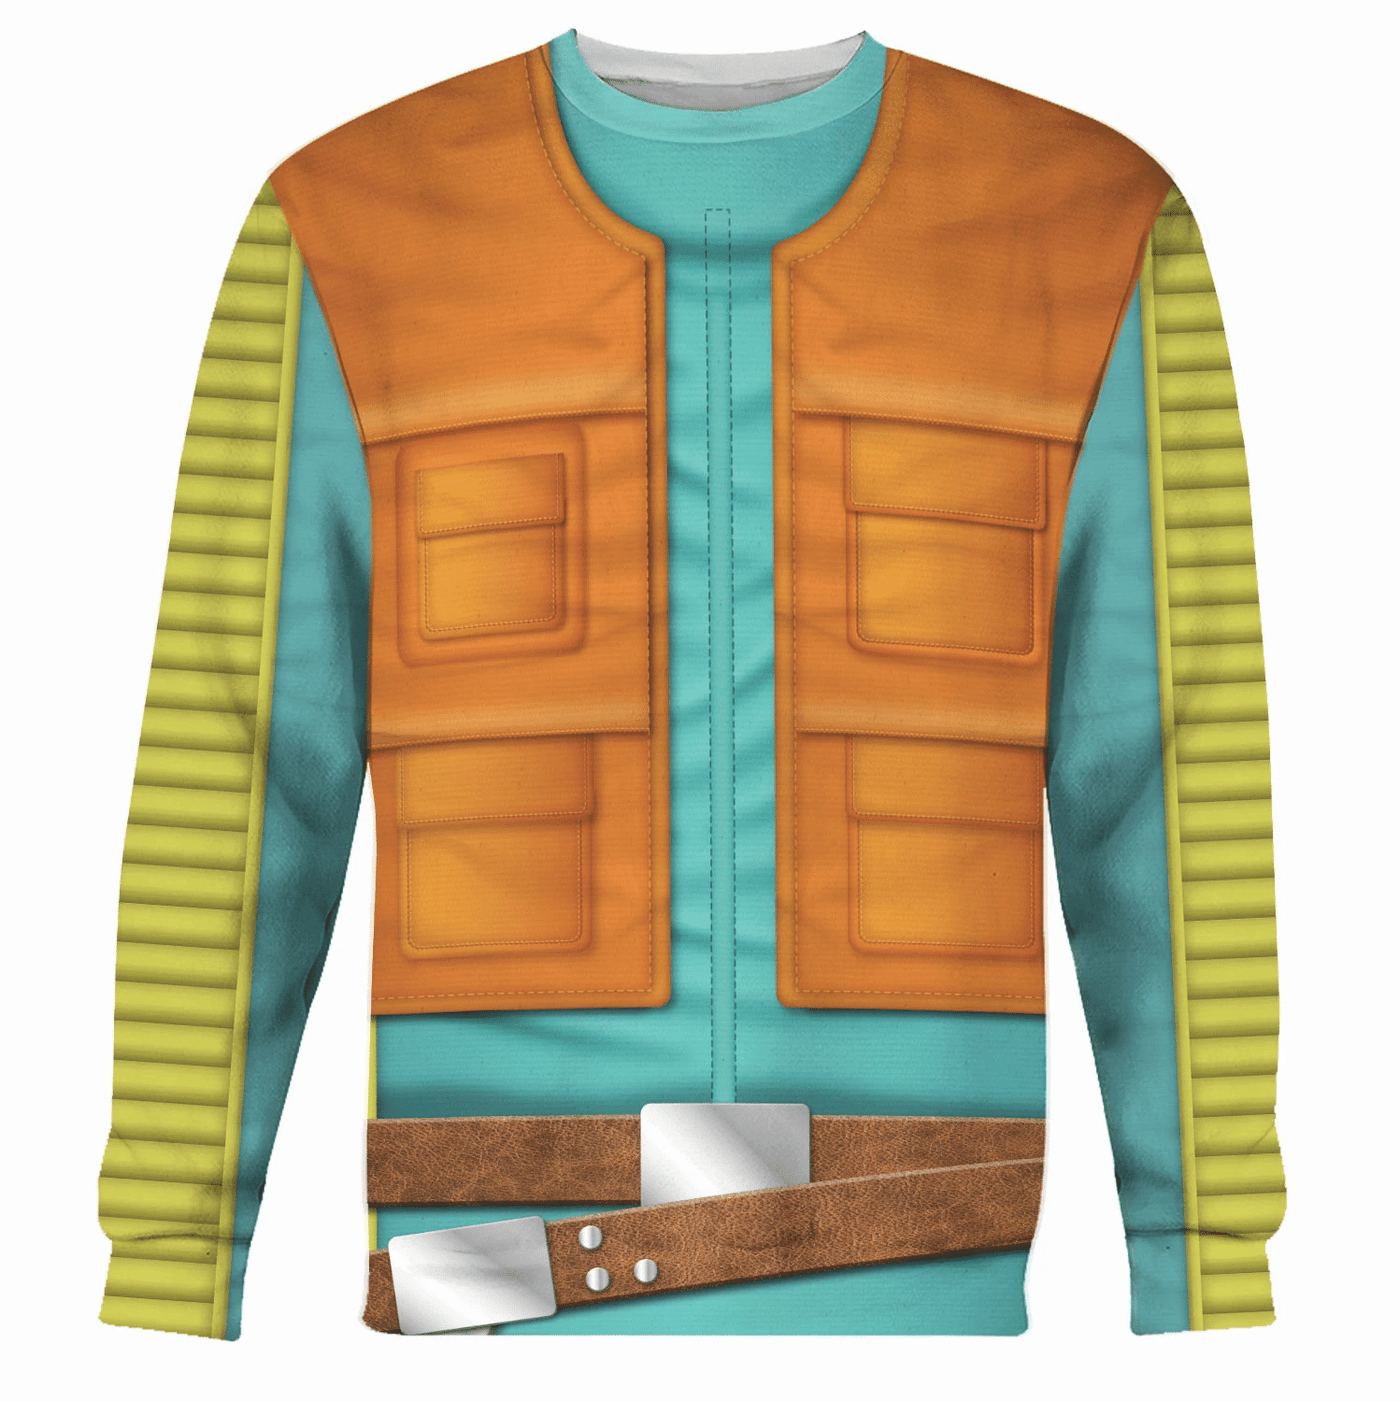 Star Wars Greedo Tetsu Jr. Costume - Sweater - Ugly Christmas Sweater